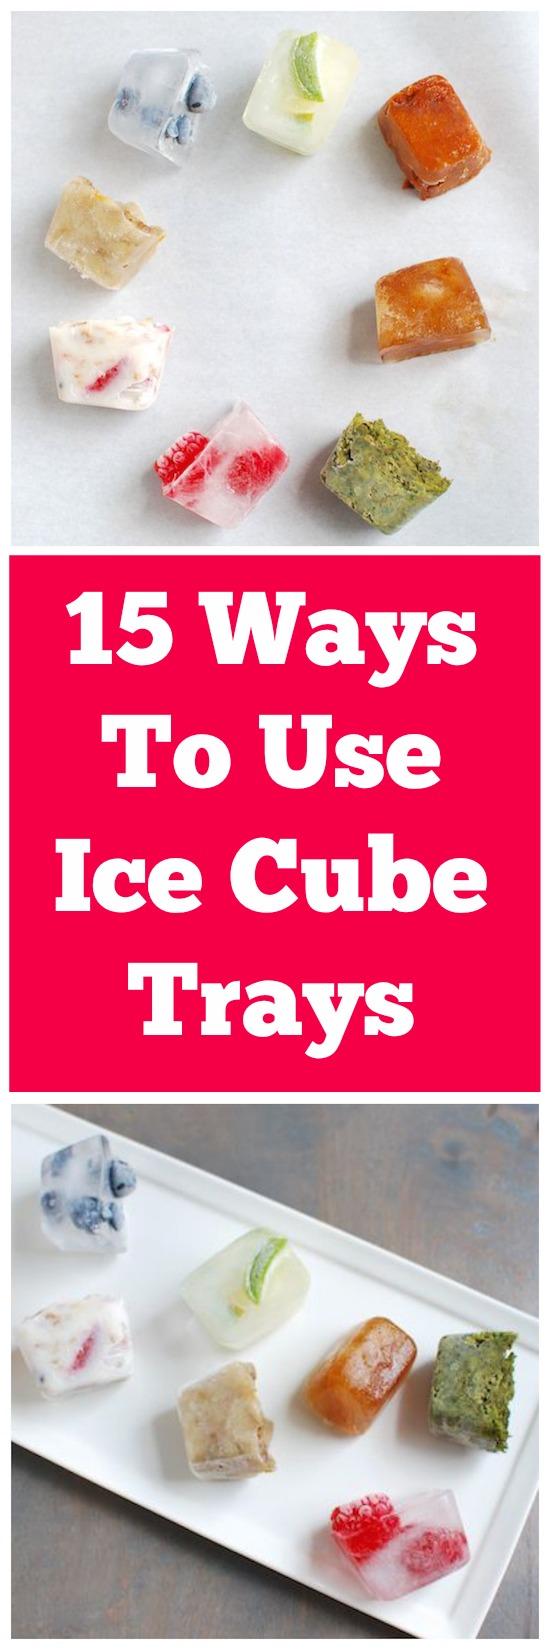 15 Ways To Use Ice Cube Trays